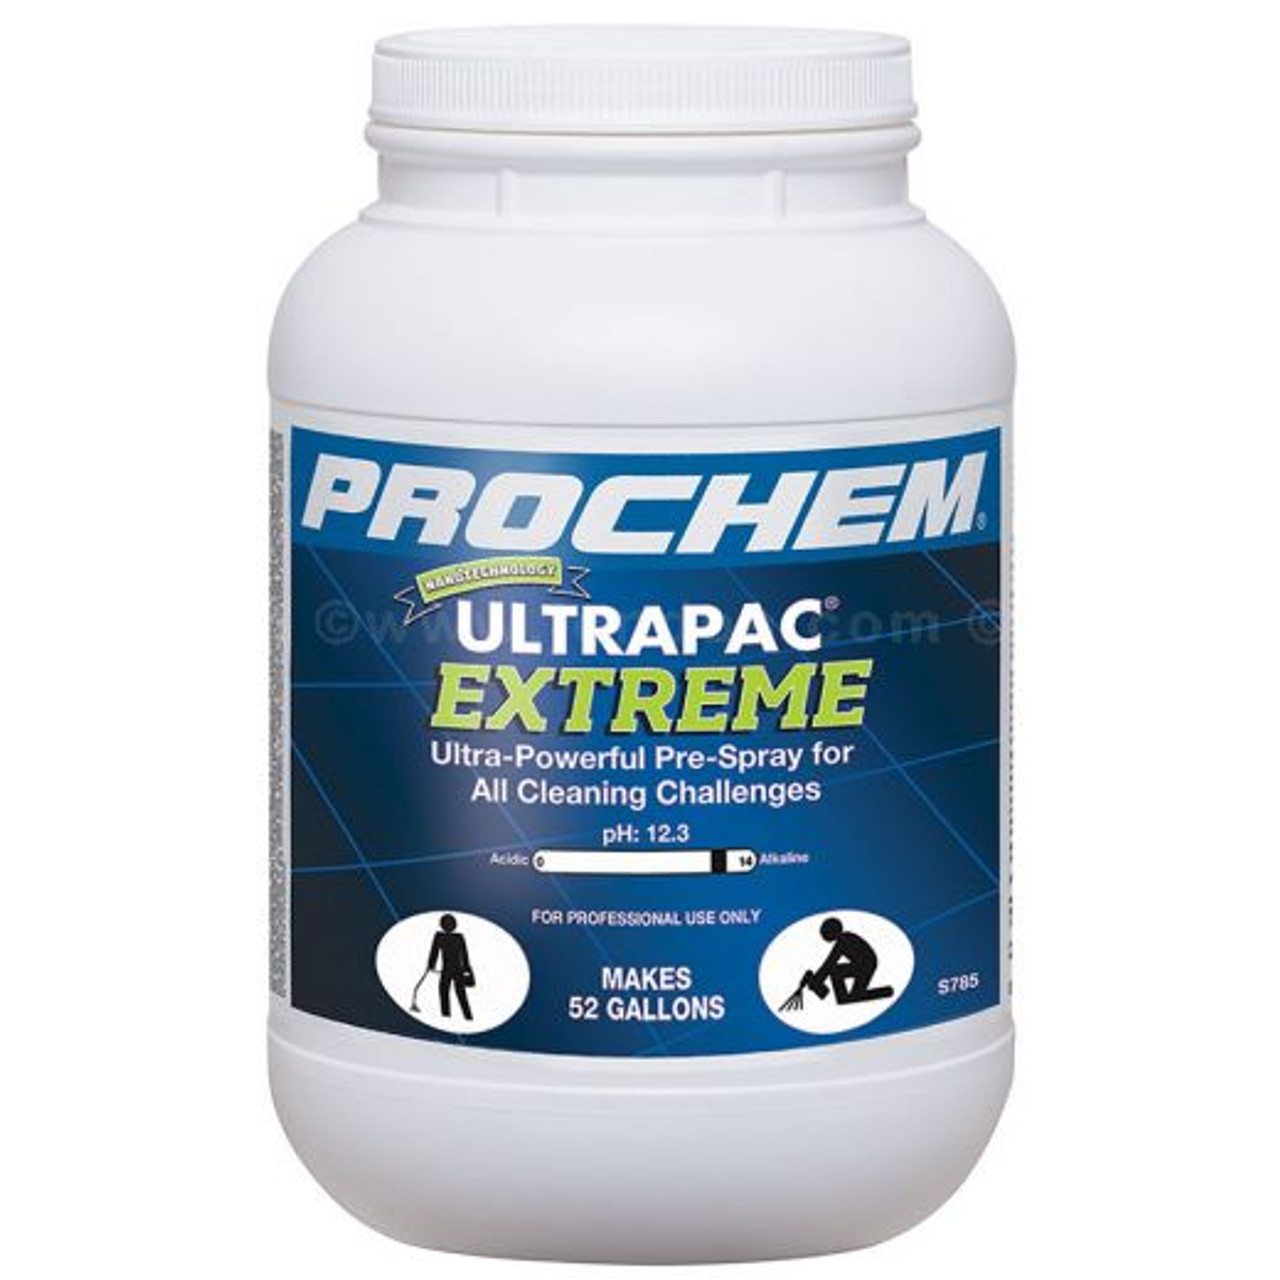 Prochem Ultrapac Extreme - 6lb